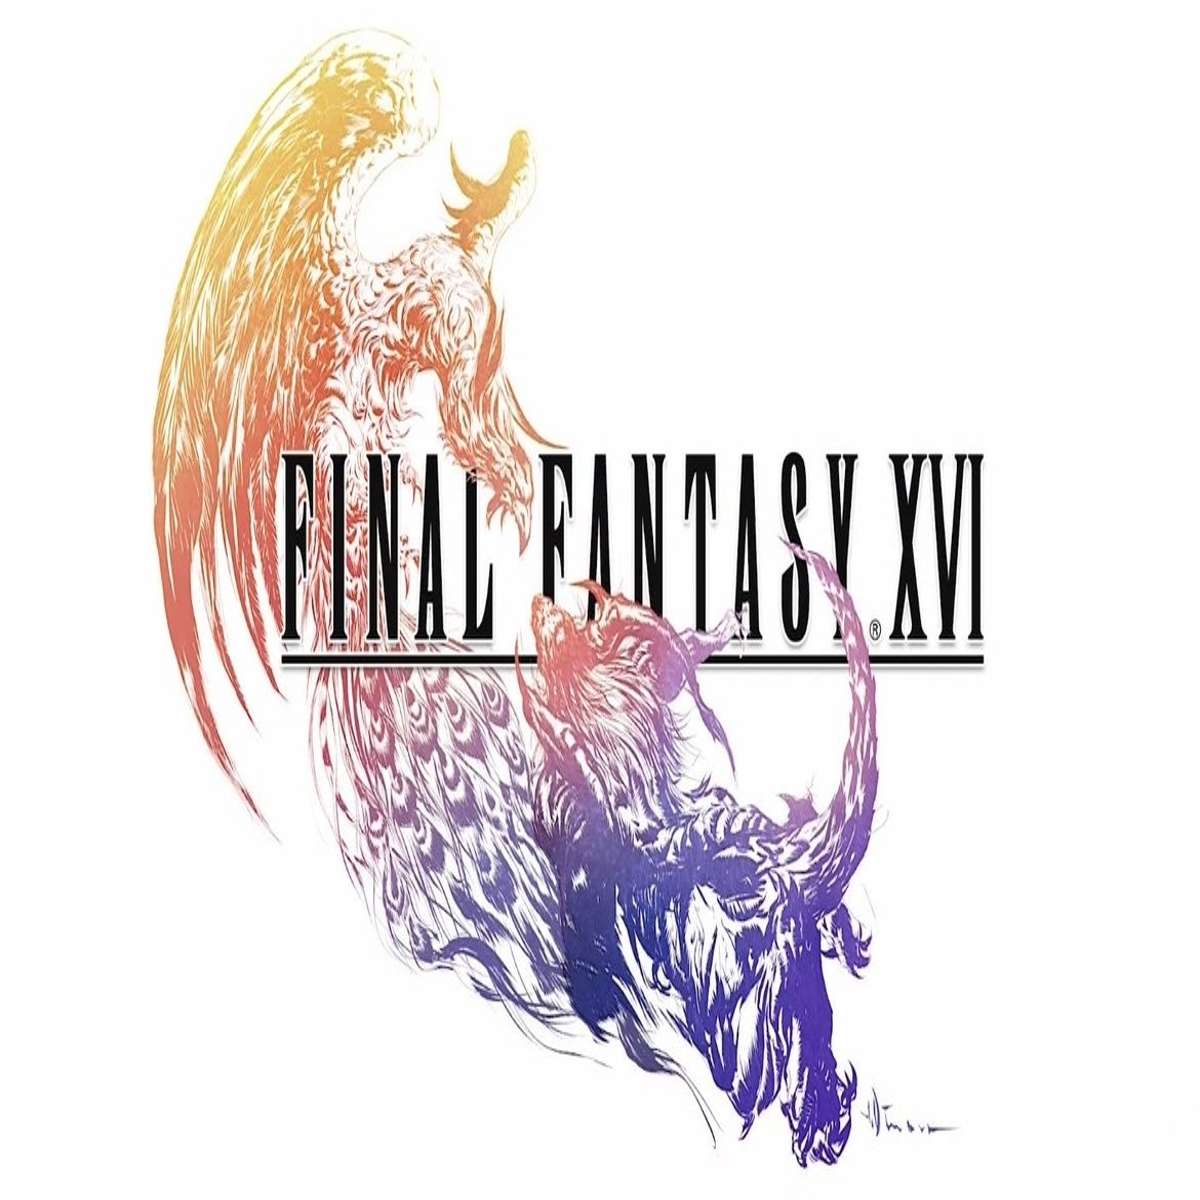 Final Fantasy XVI PlayStation 5